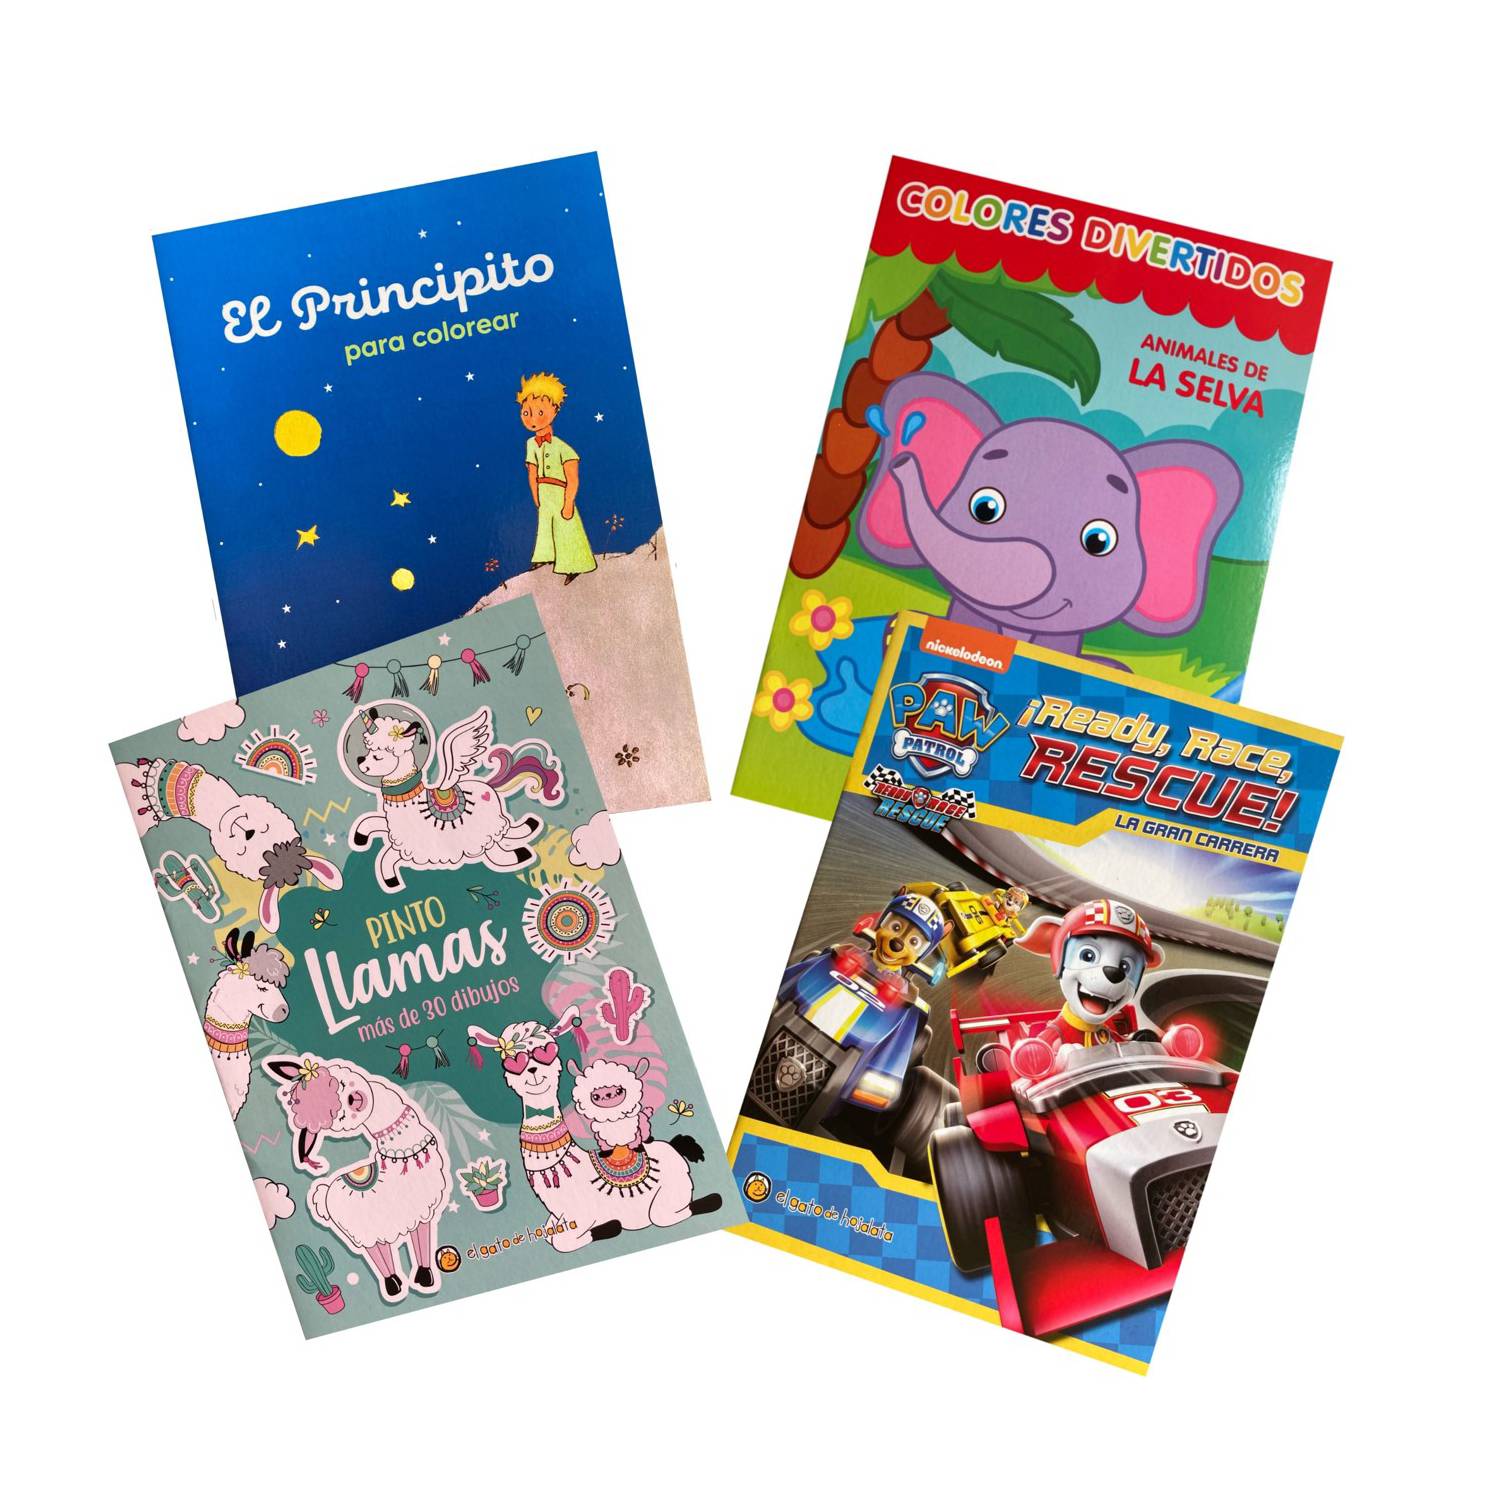 4 Libros infantiles | falabella.com